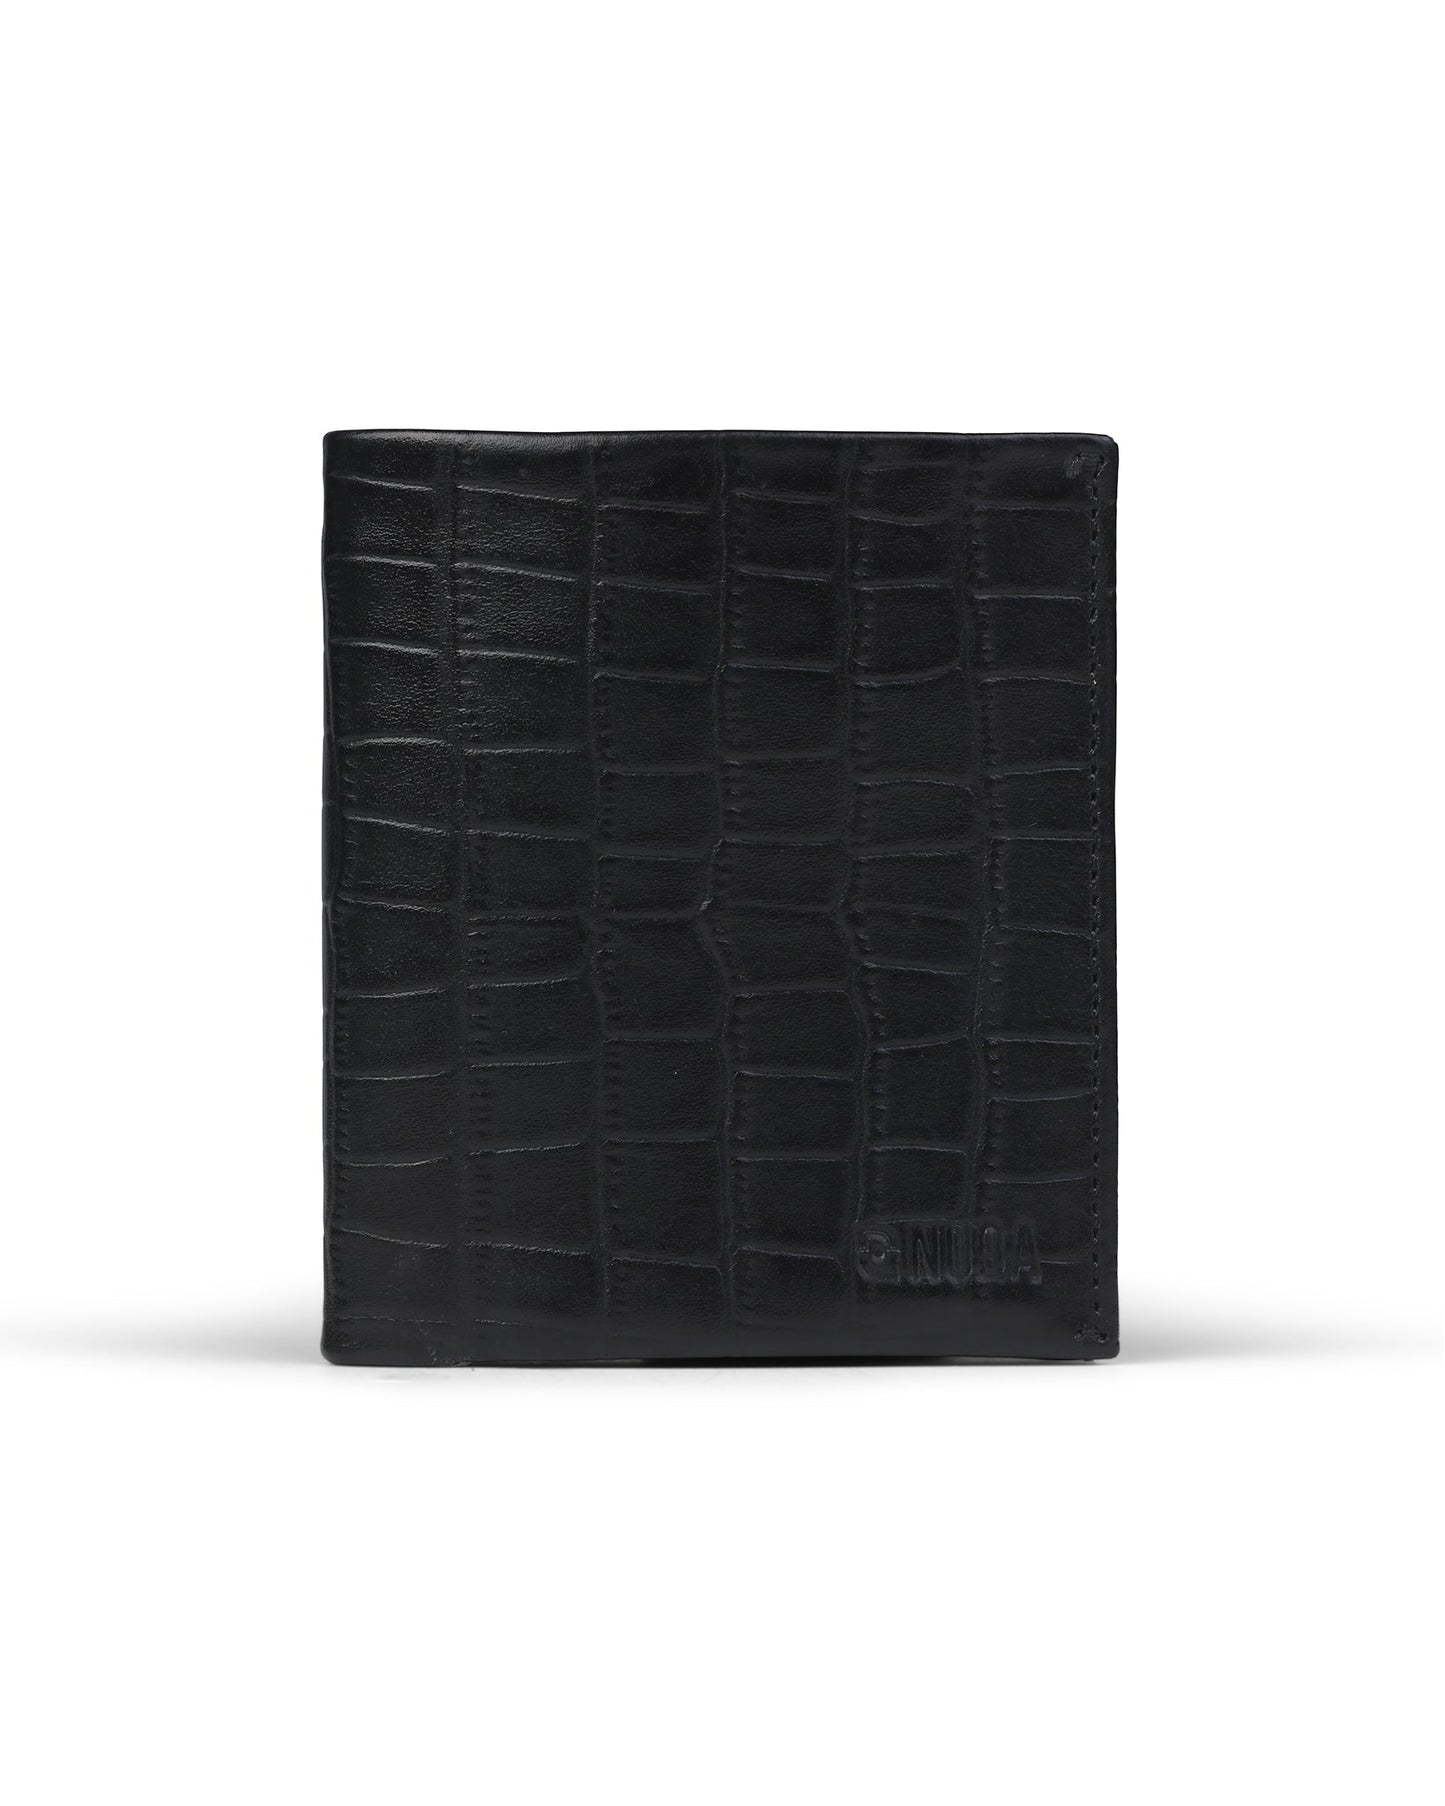 Slim Leather Wallet - Negro Cocodrilo/Rojo